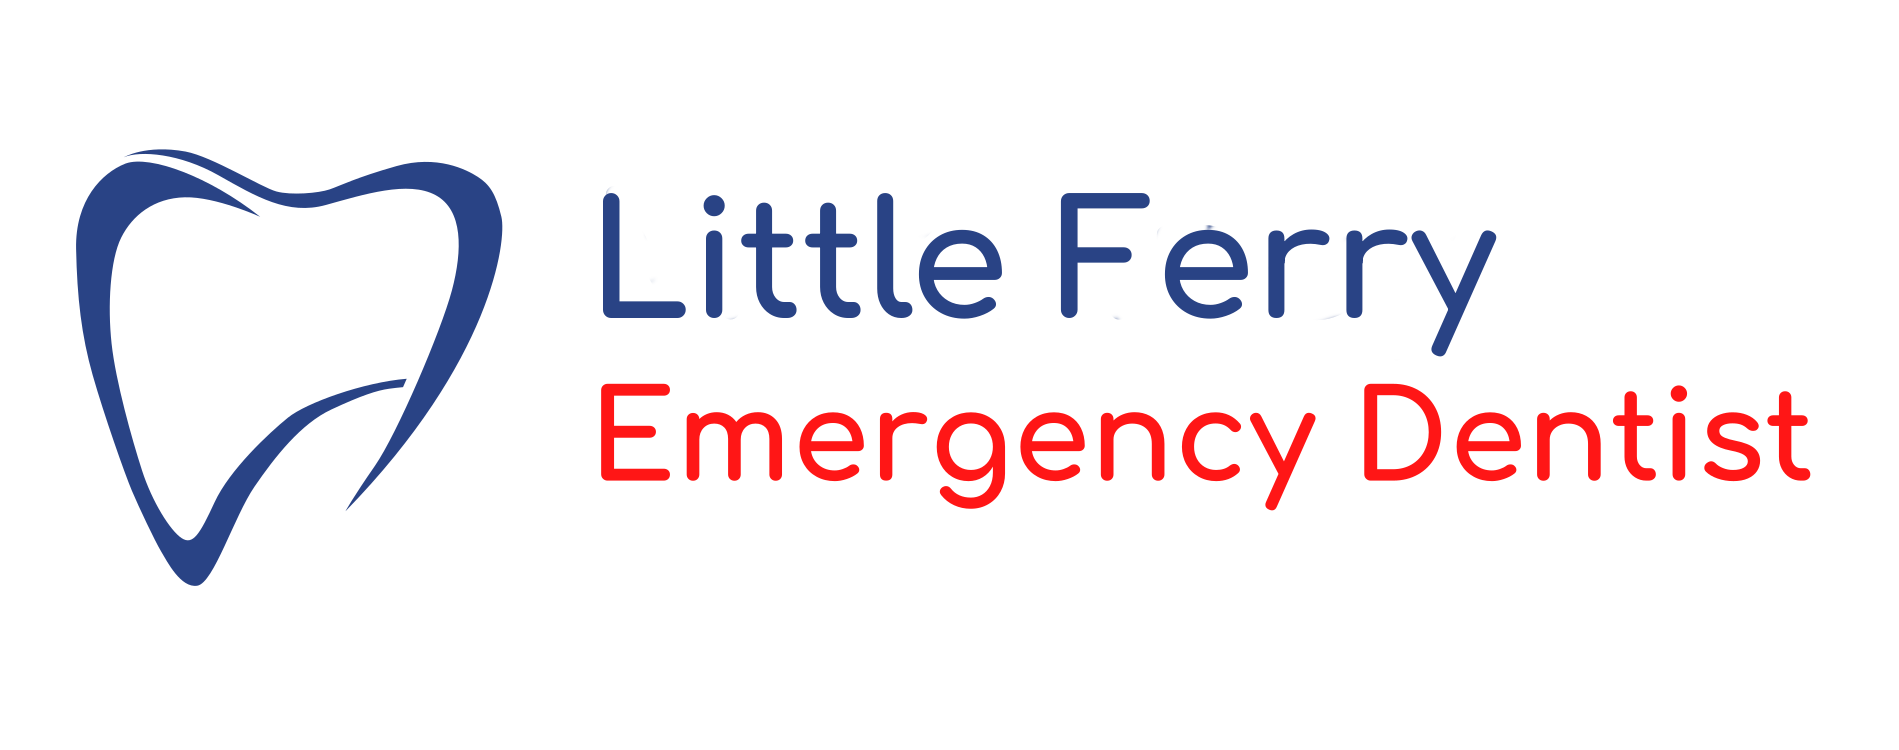 Little Ferry Emergency Dentist